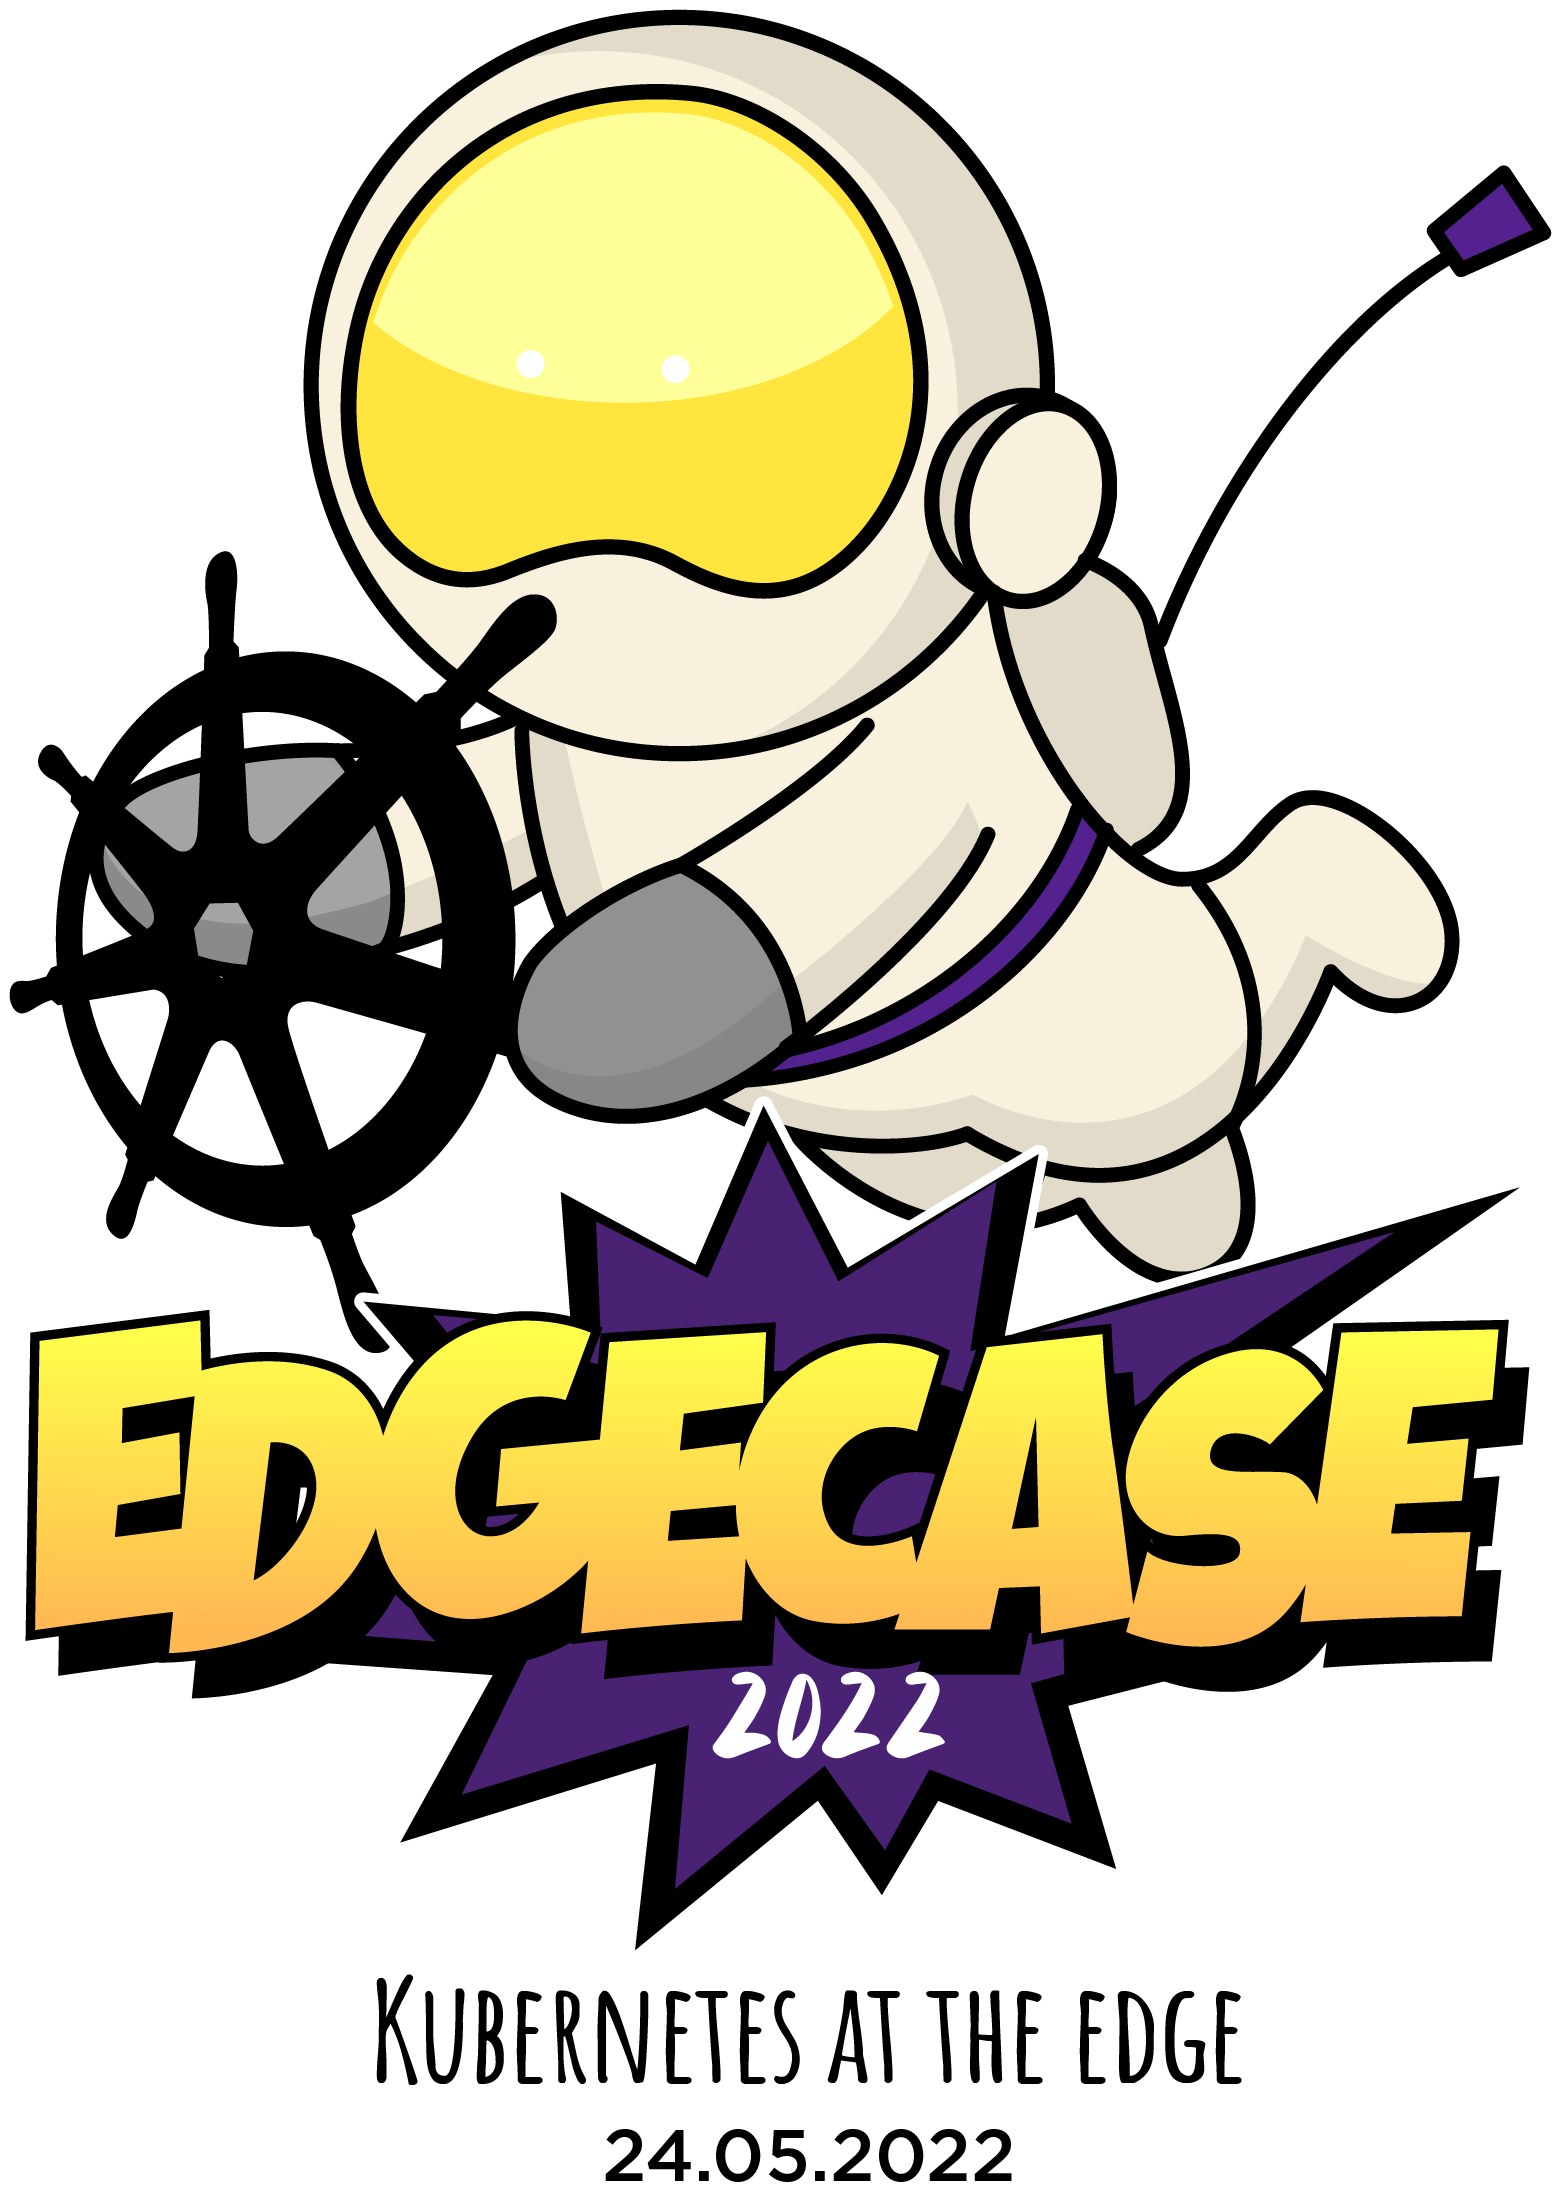 Edgecase 2022  Kubernetes at the Edge by Fullstaq